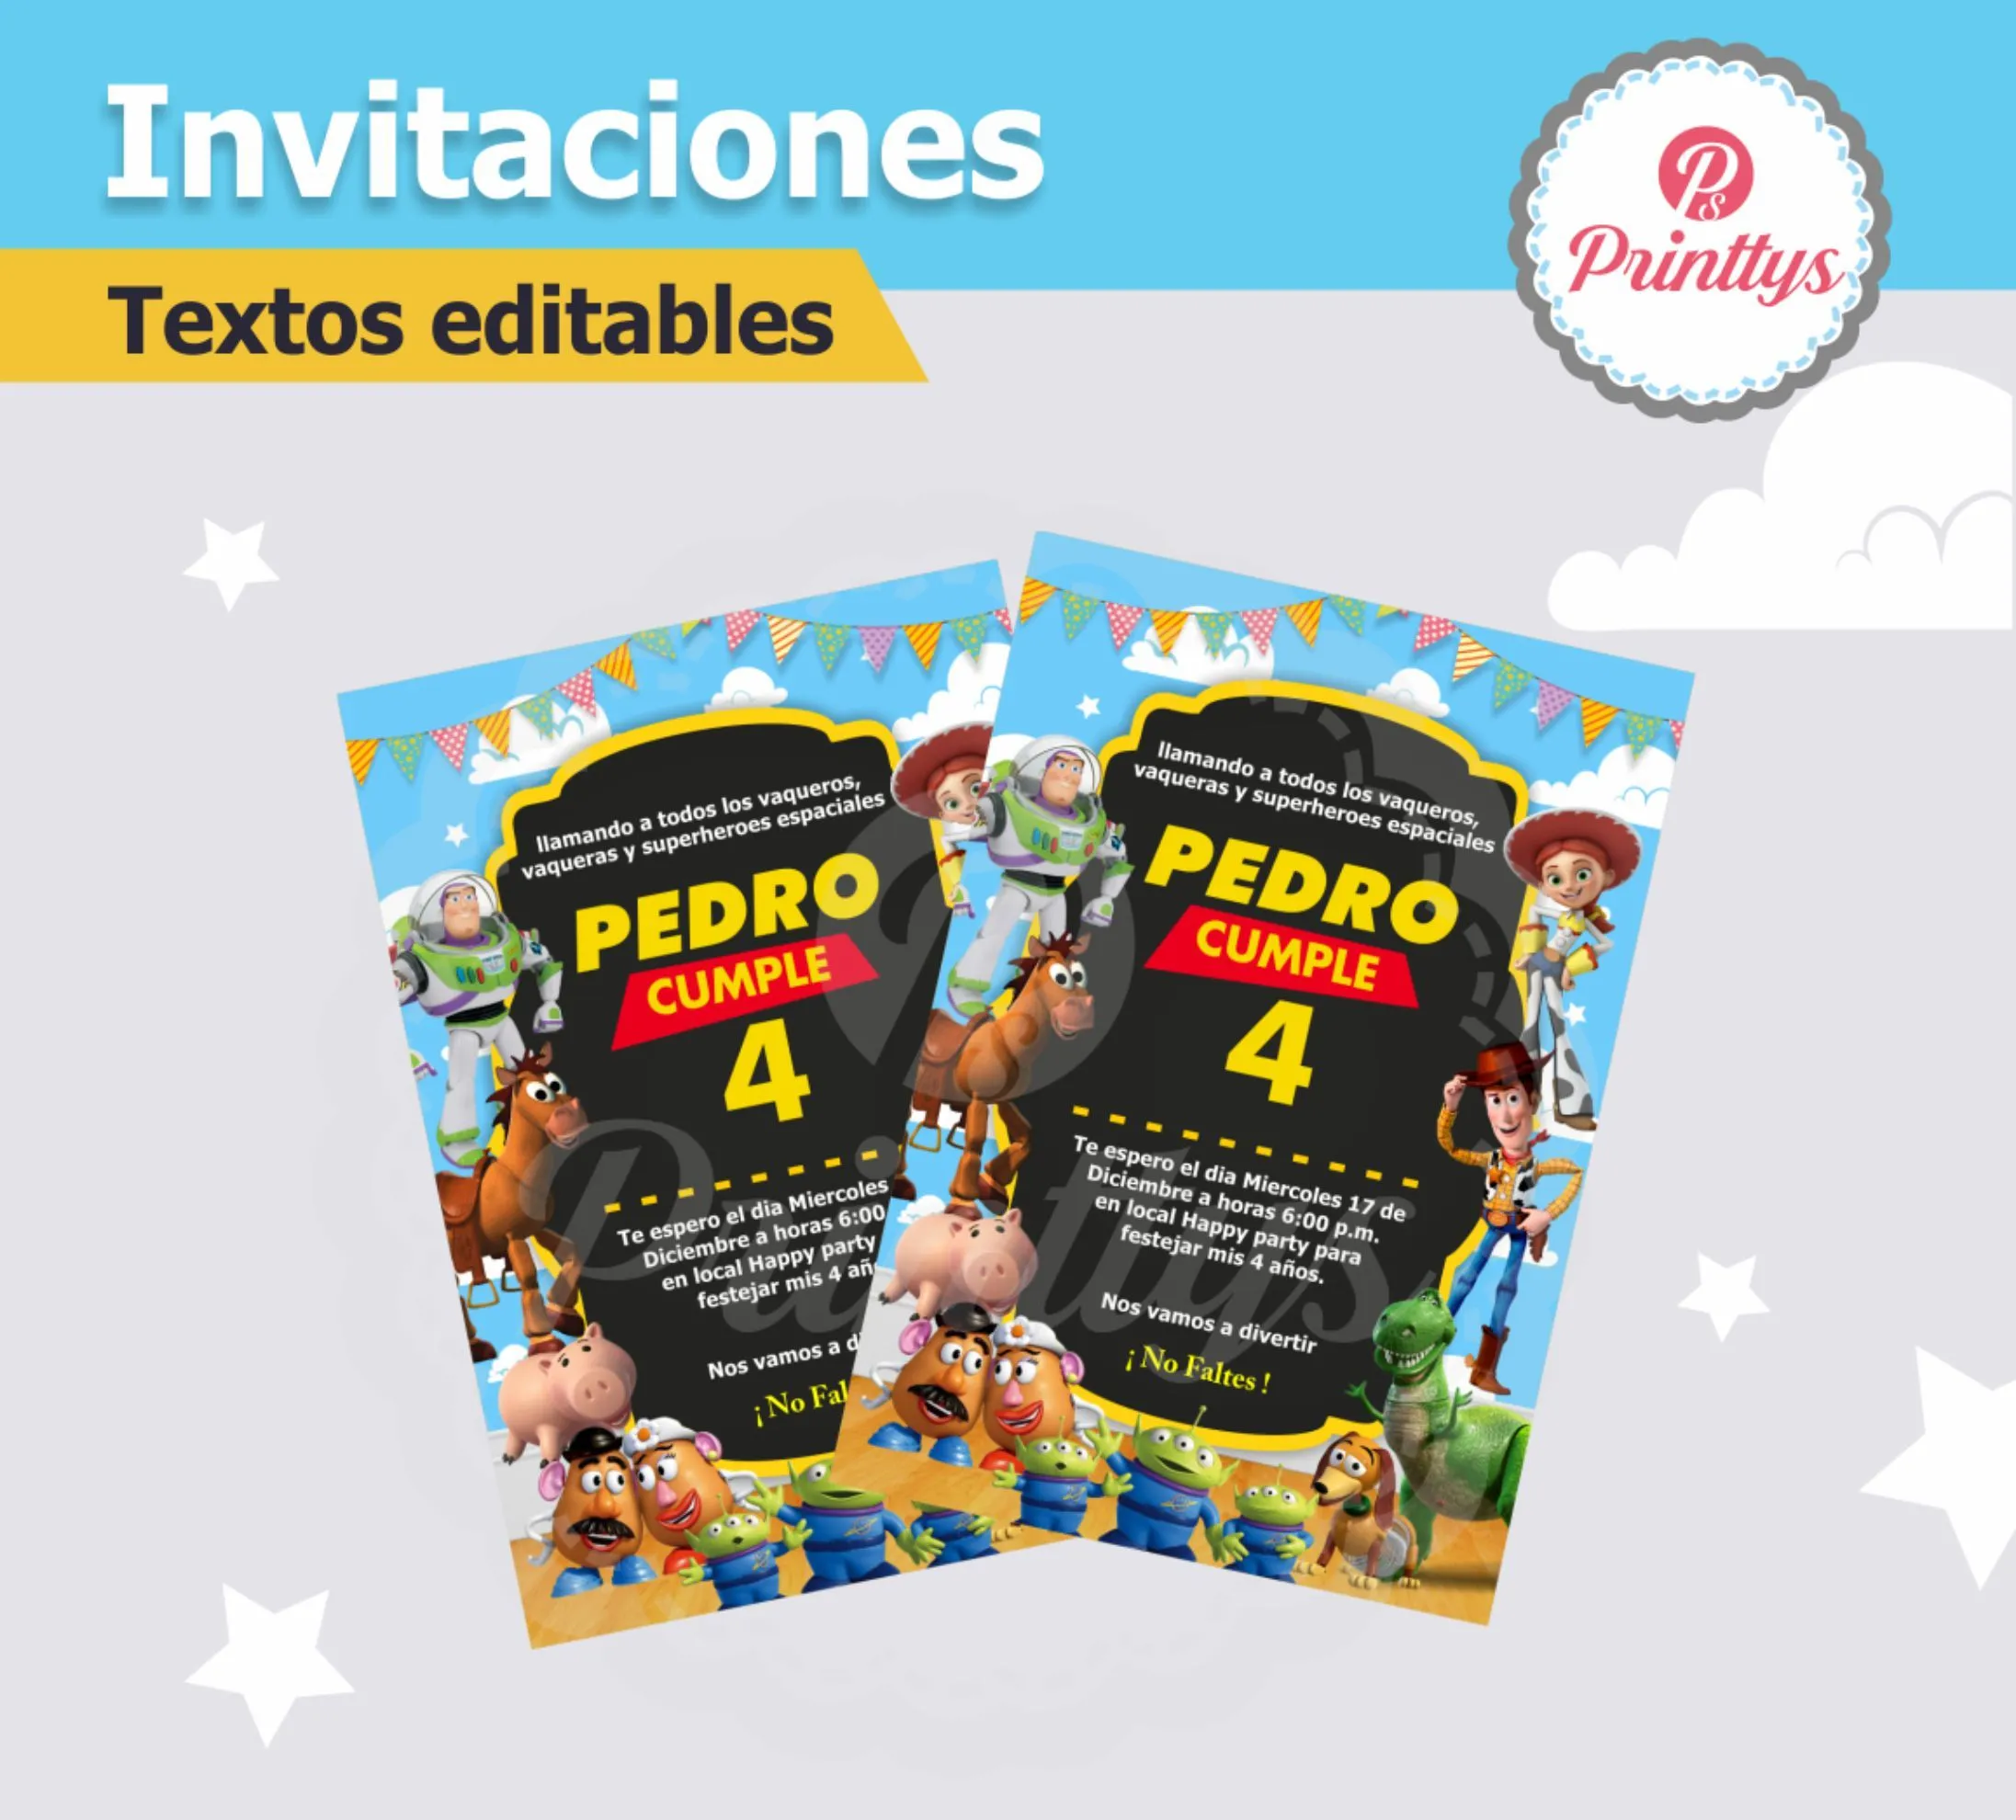 Invitacion Toy Story – Printtys